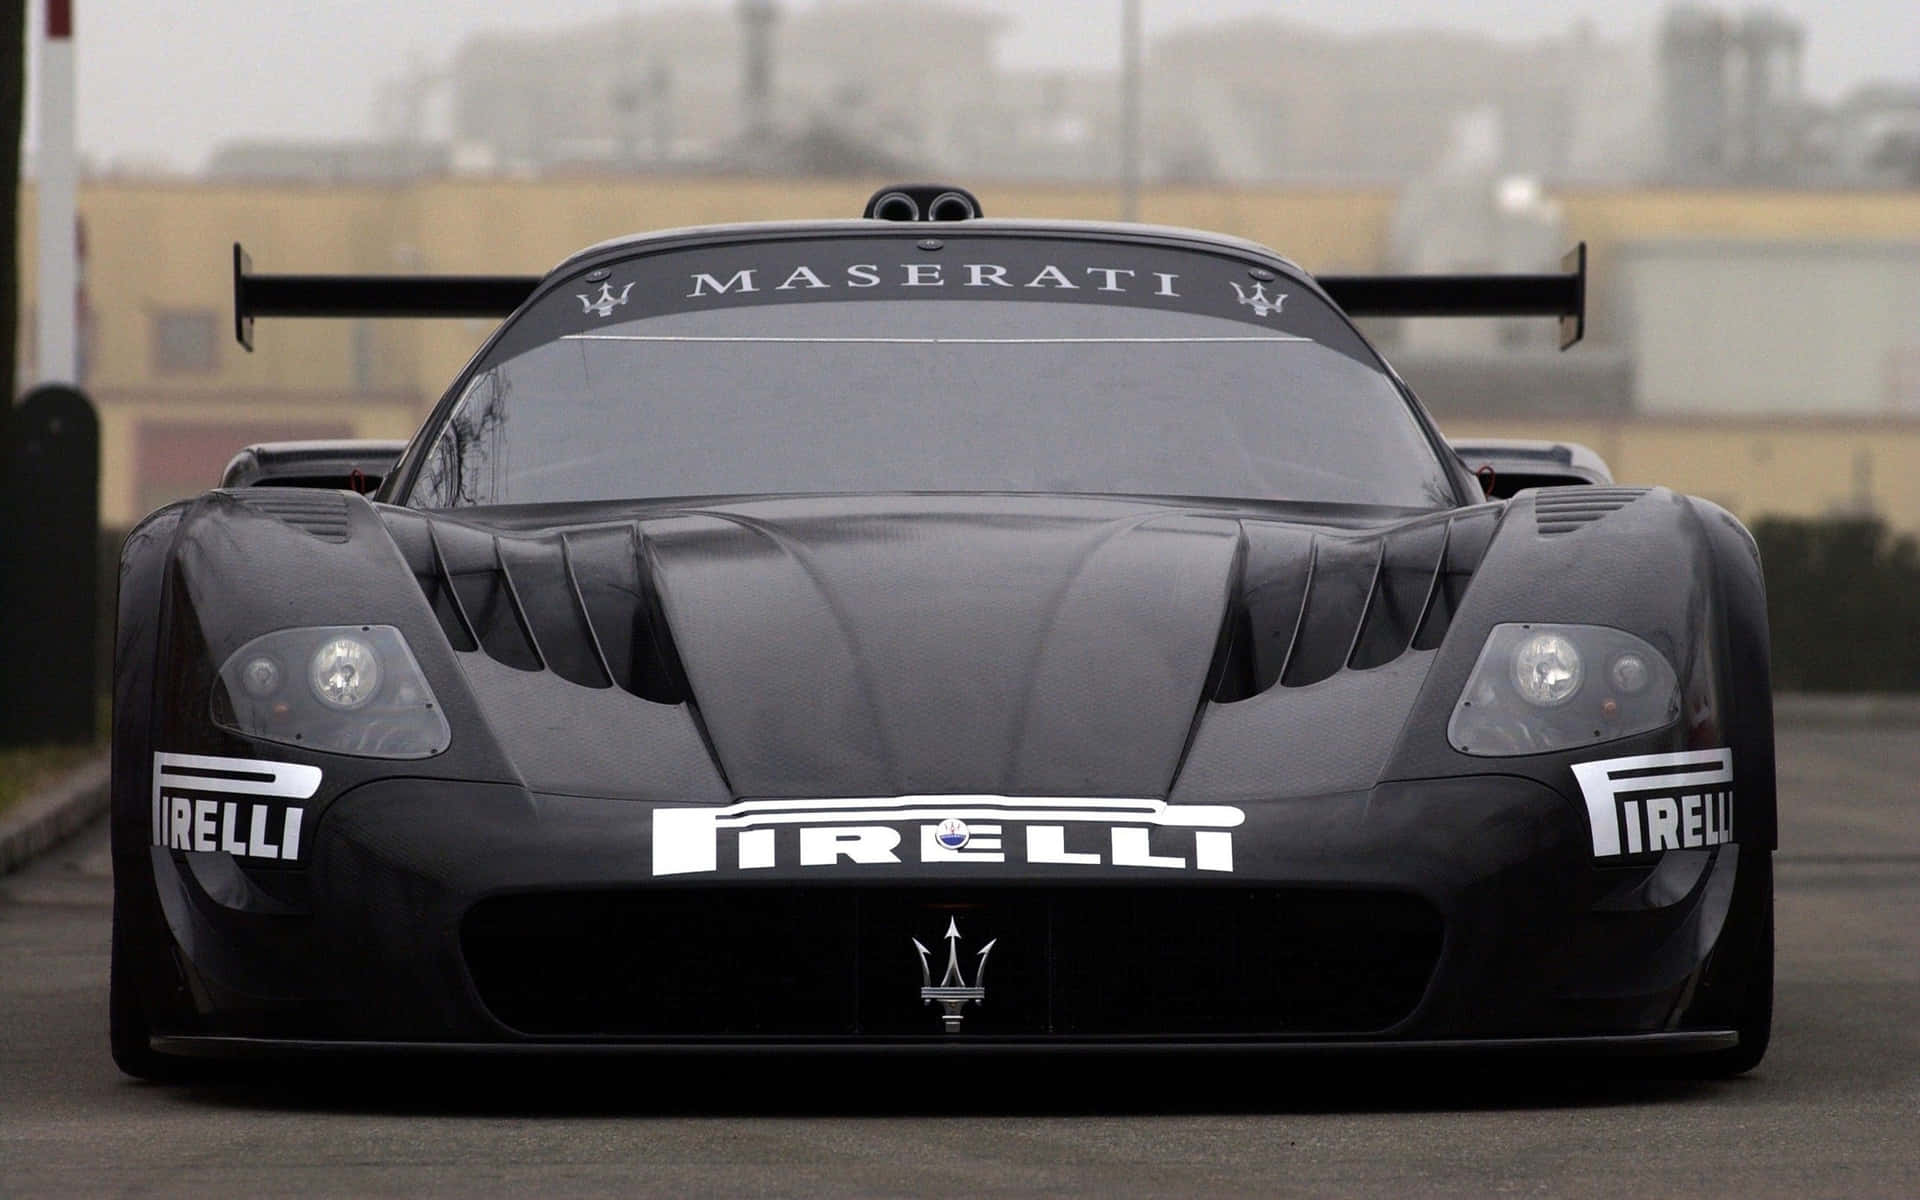 Pirelli Maserati 4k Wallpaper